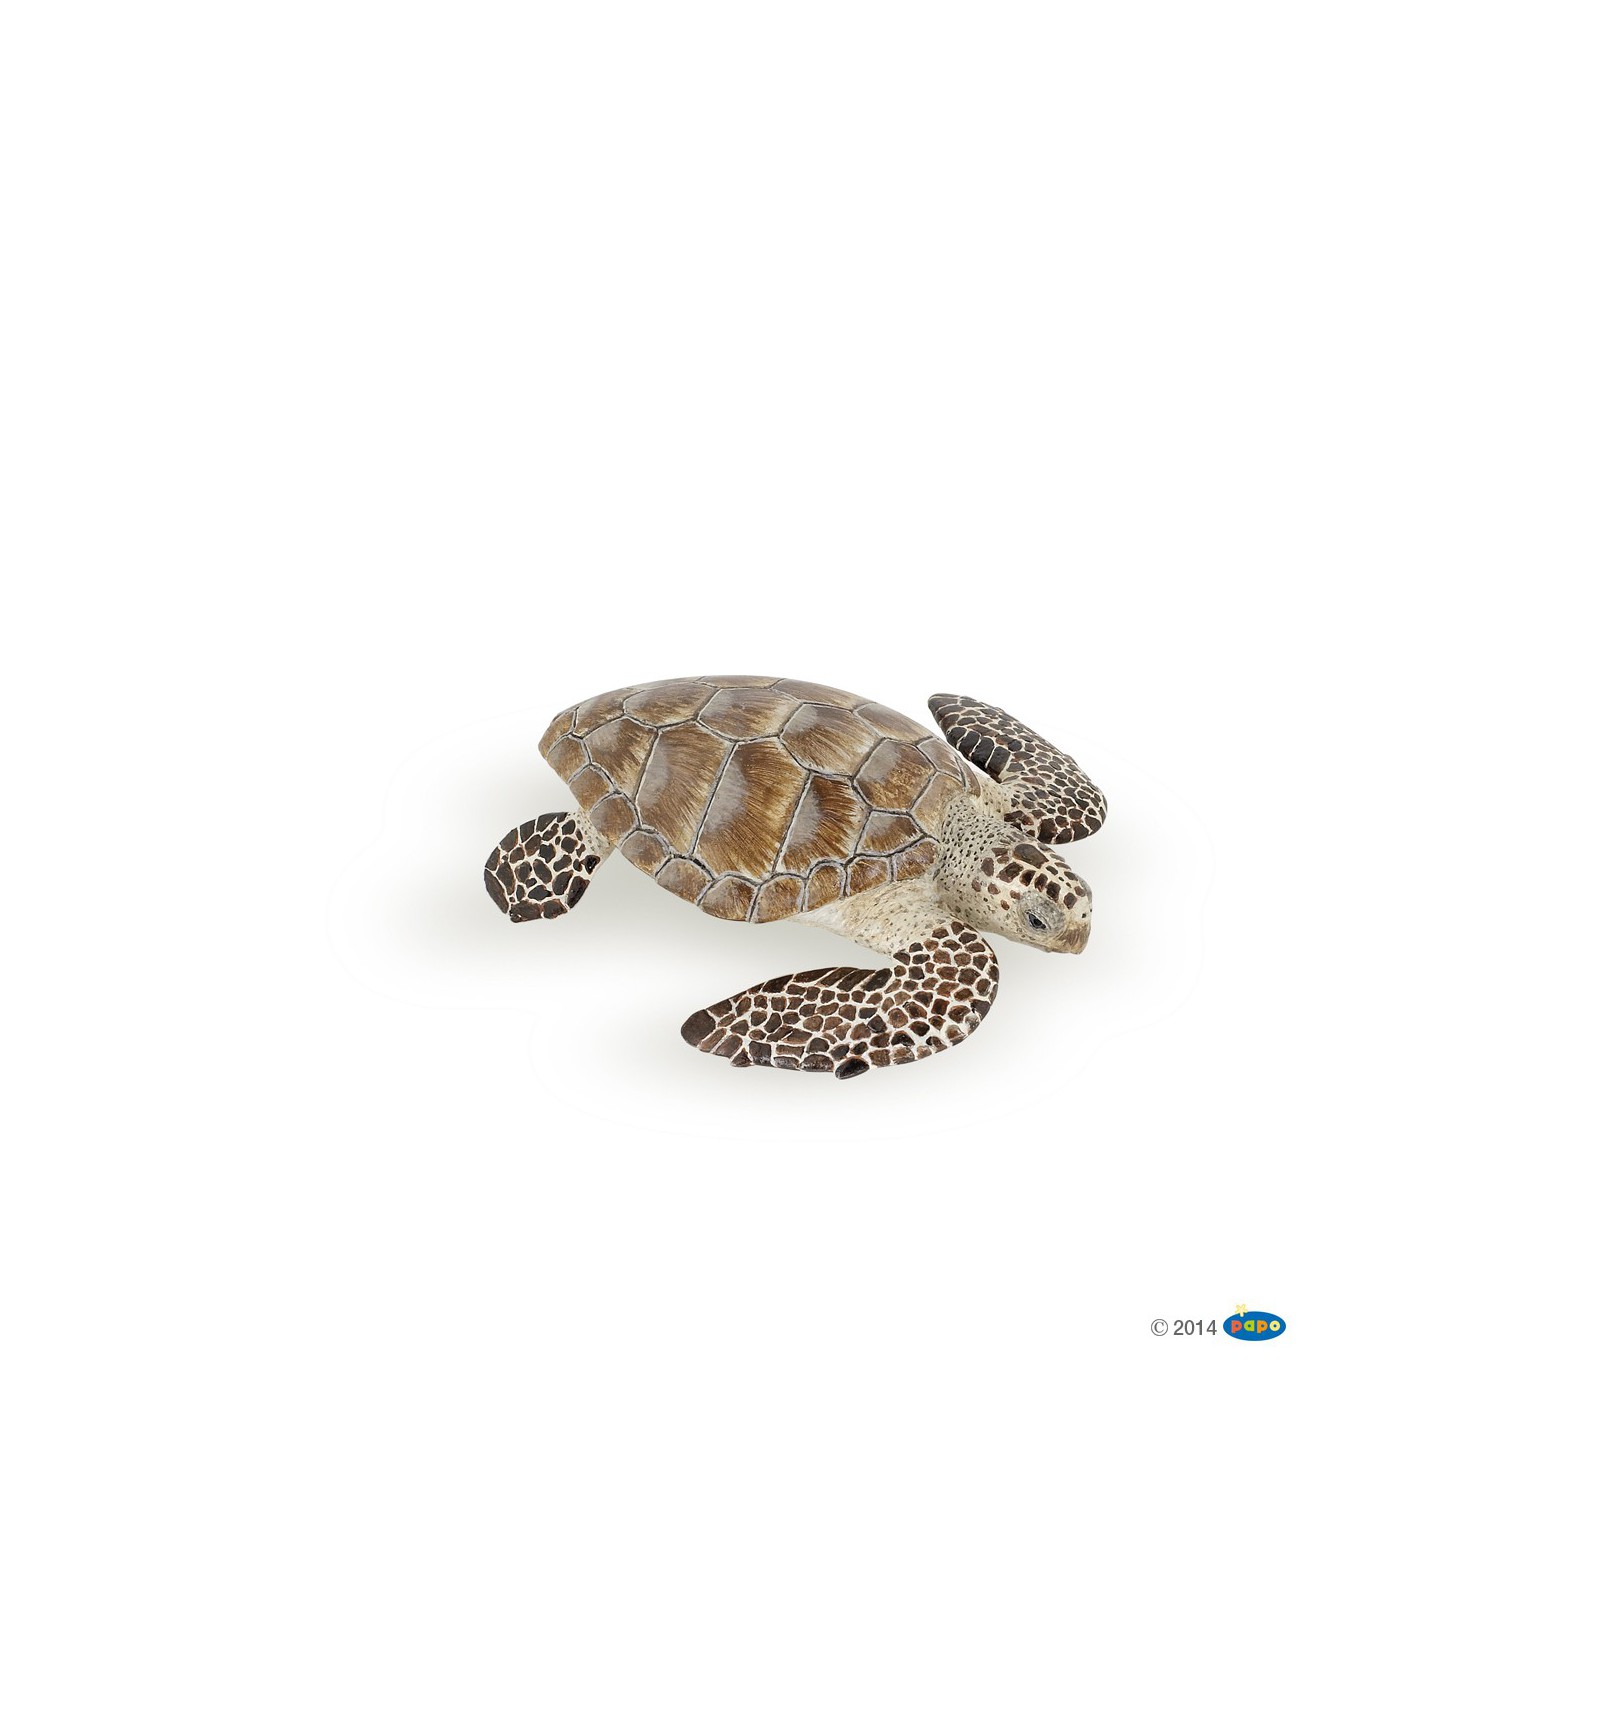 Loggerhead turtle - Papo